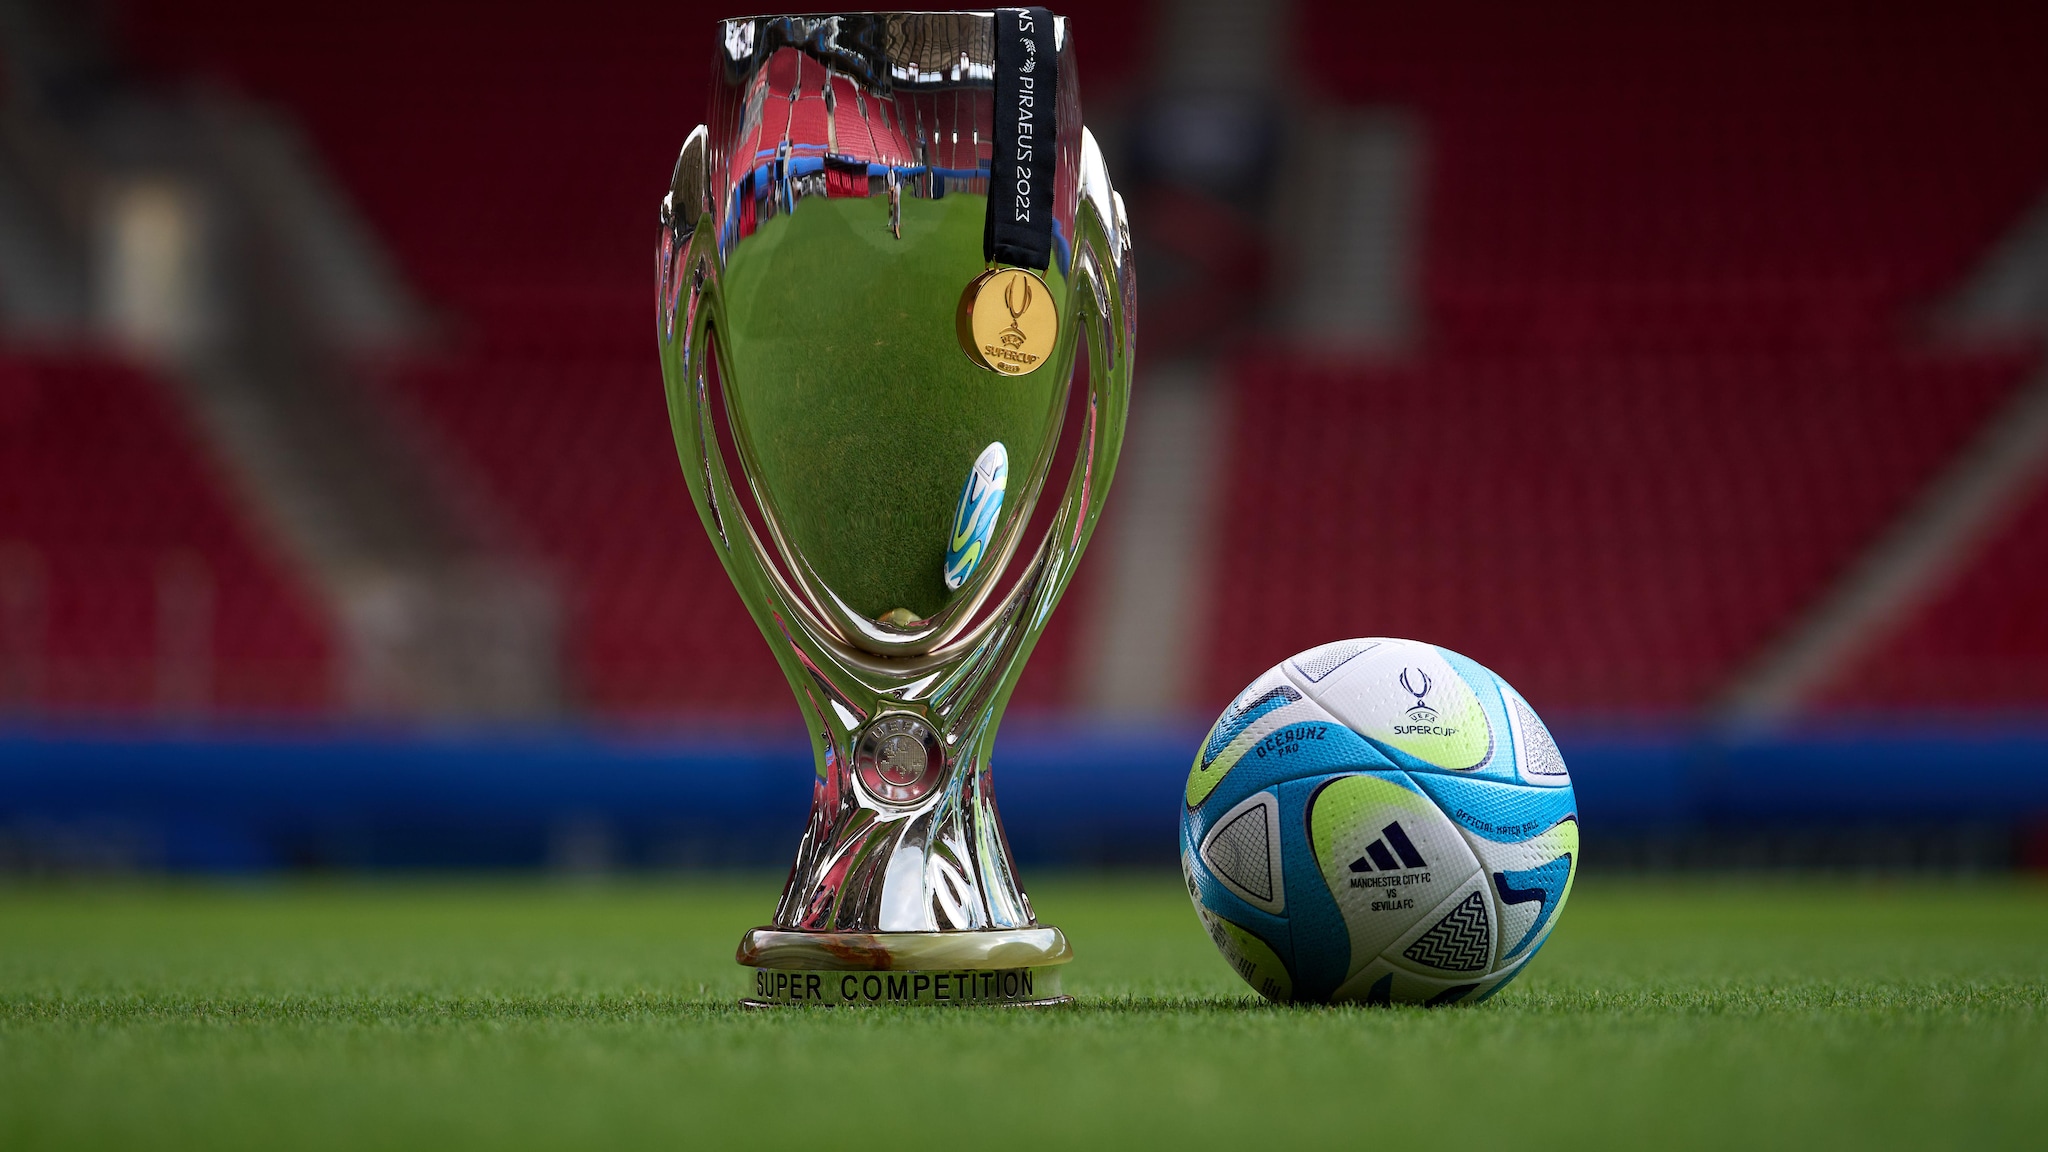 Tallinn could host 2018 UEFA Super Cup, News